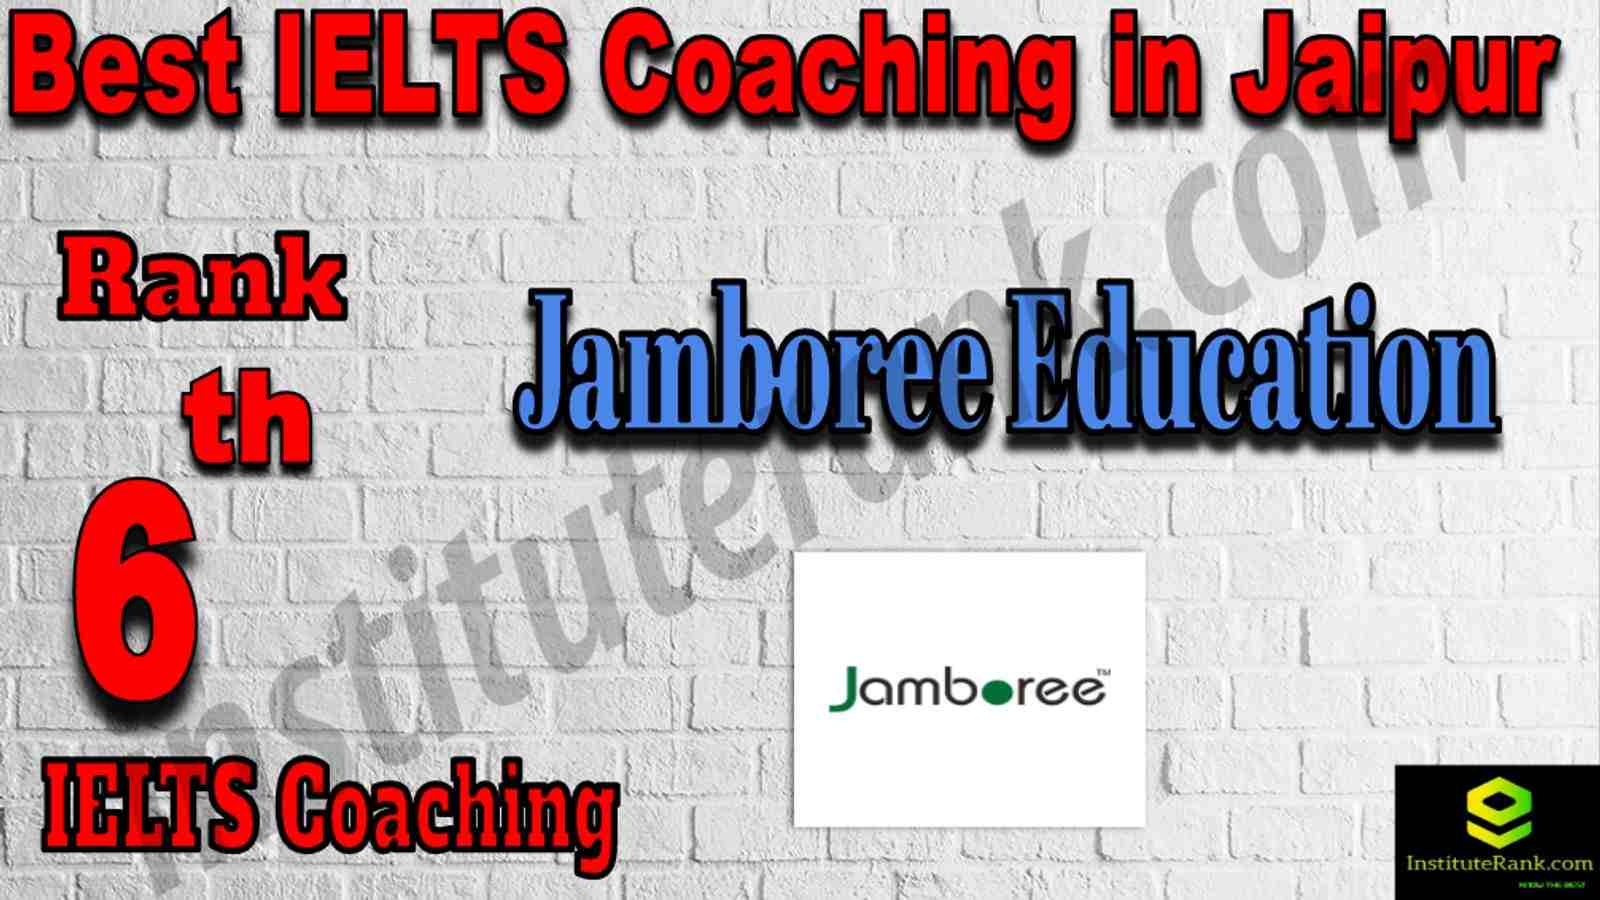 6th Best IELTS Coaching in Jaipur